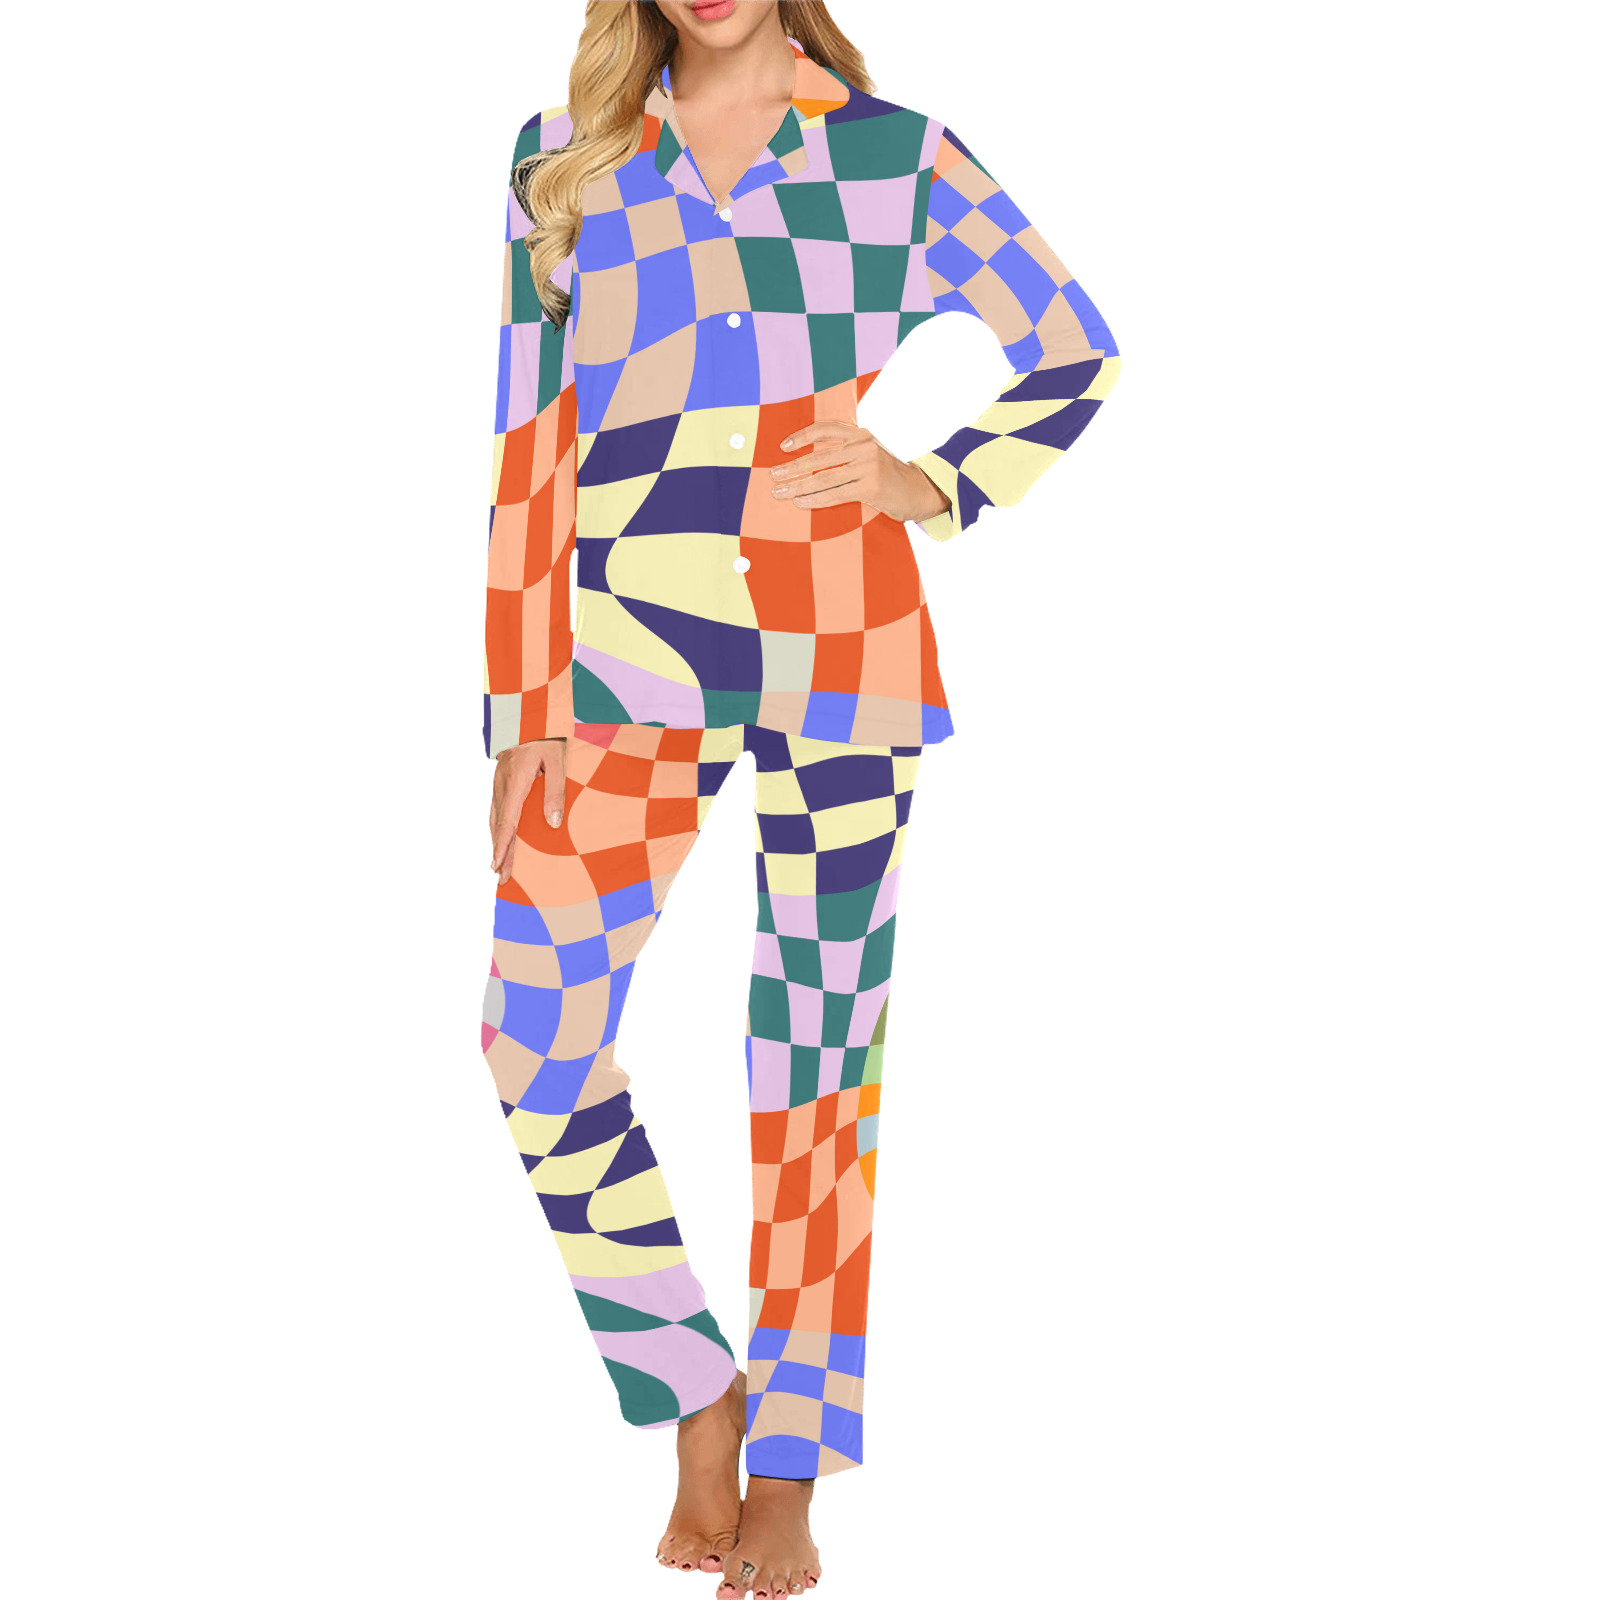 Wavy Groovy Geometric Checkered Retro Abstract Mosaic Pixels Women's Long Pajama Set